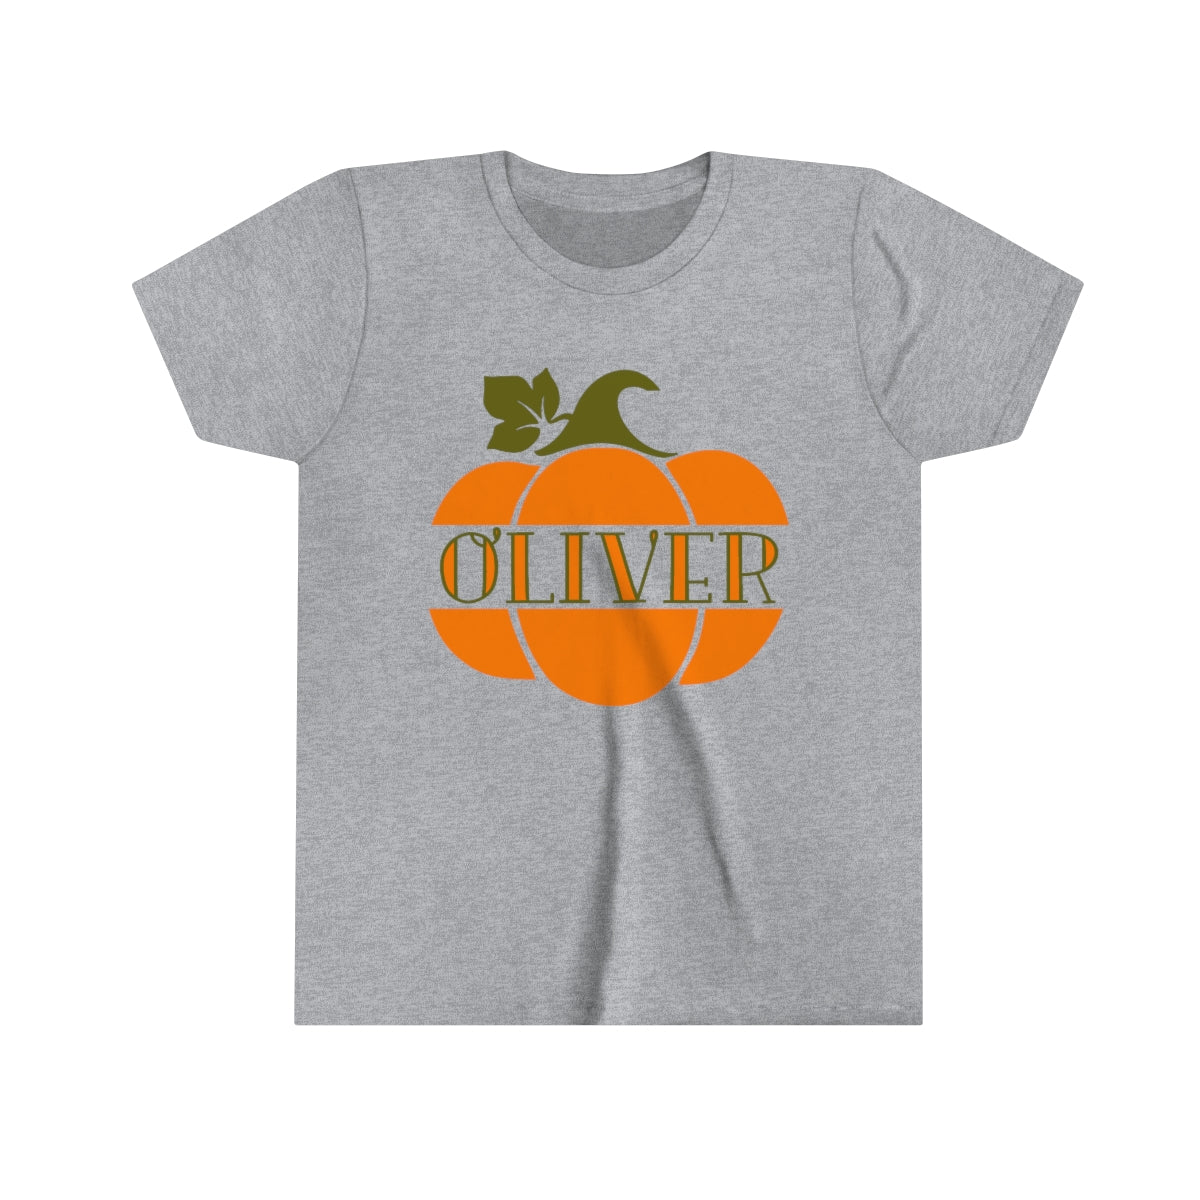 Pumpkin Name Youth Child's T-shirt S M L XL | October shirt, Custom Fall Shirt - Amazing Faith Designs